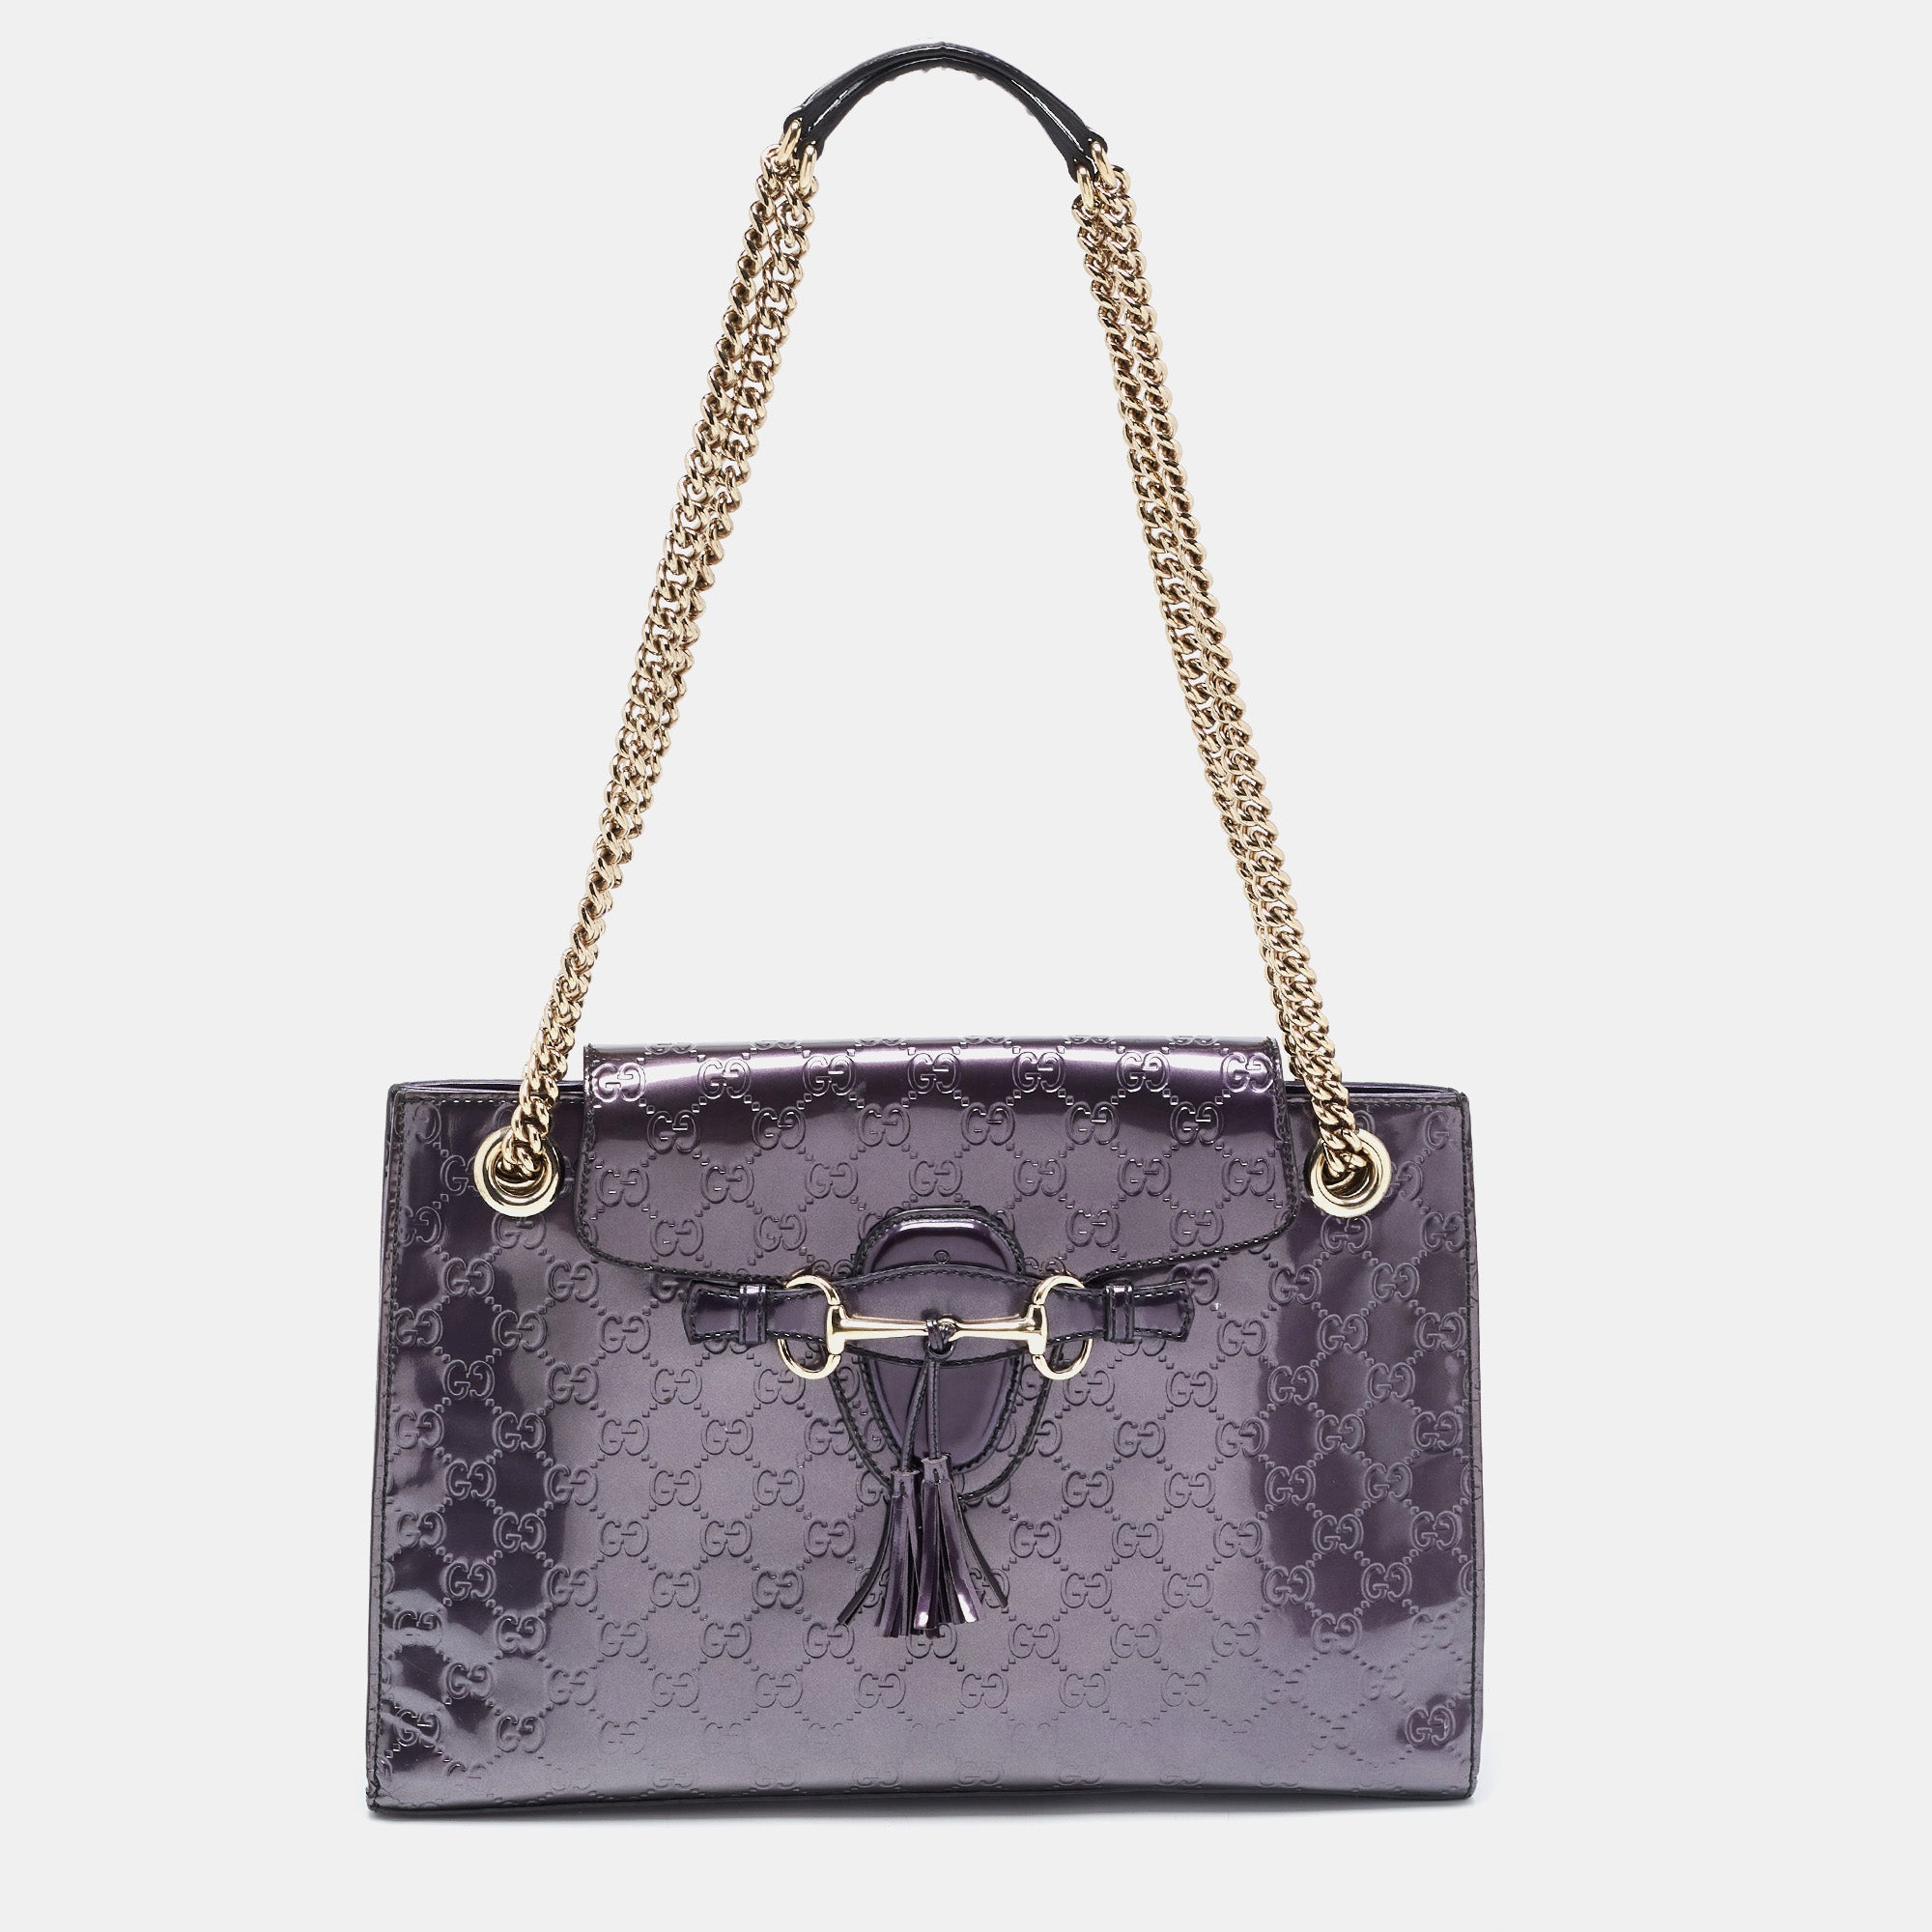 Gucci Women's Bag | Sale Up to 90% @ ZALORA SG